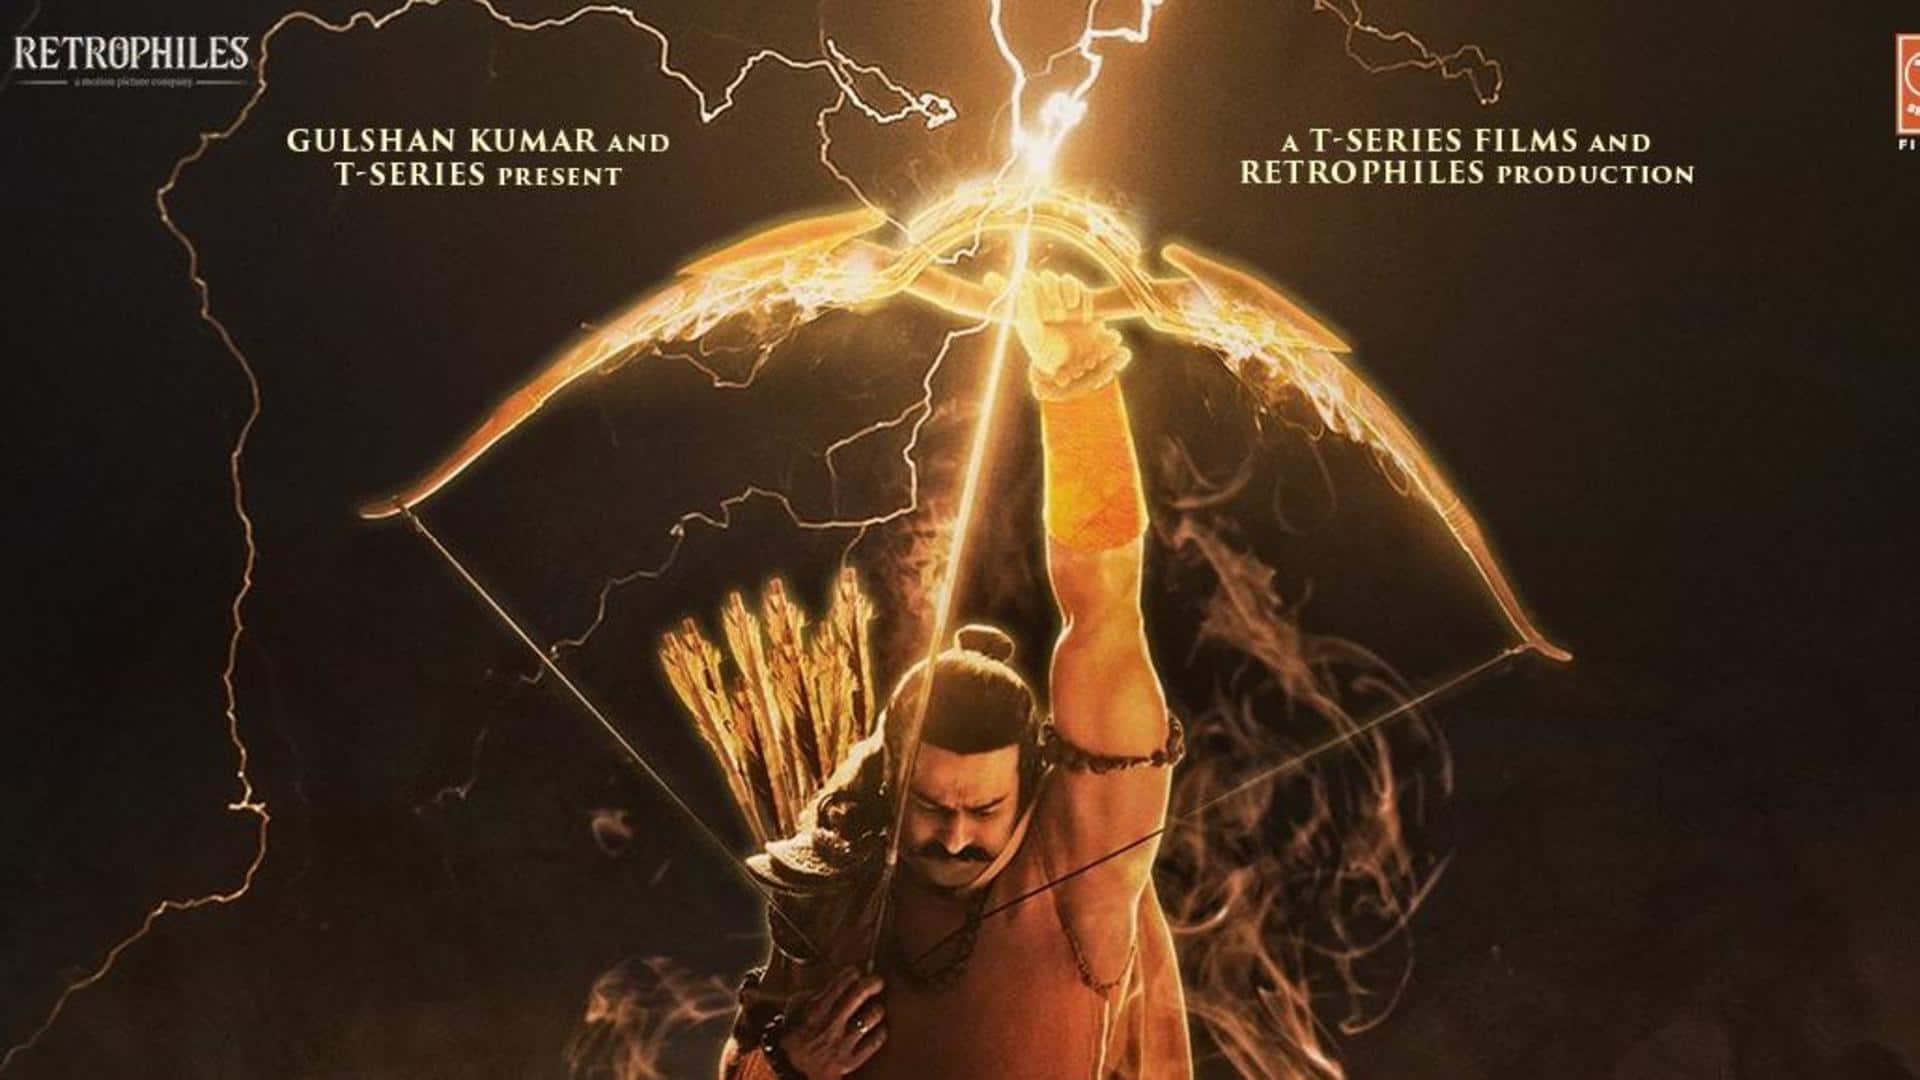 'Adipurush' makers unveil new poster featuring Prabhas ahead of trailer